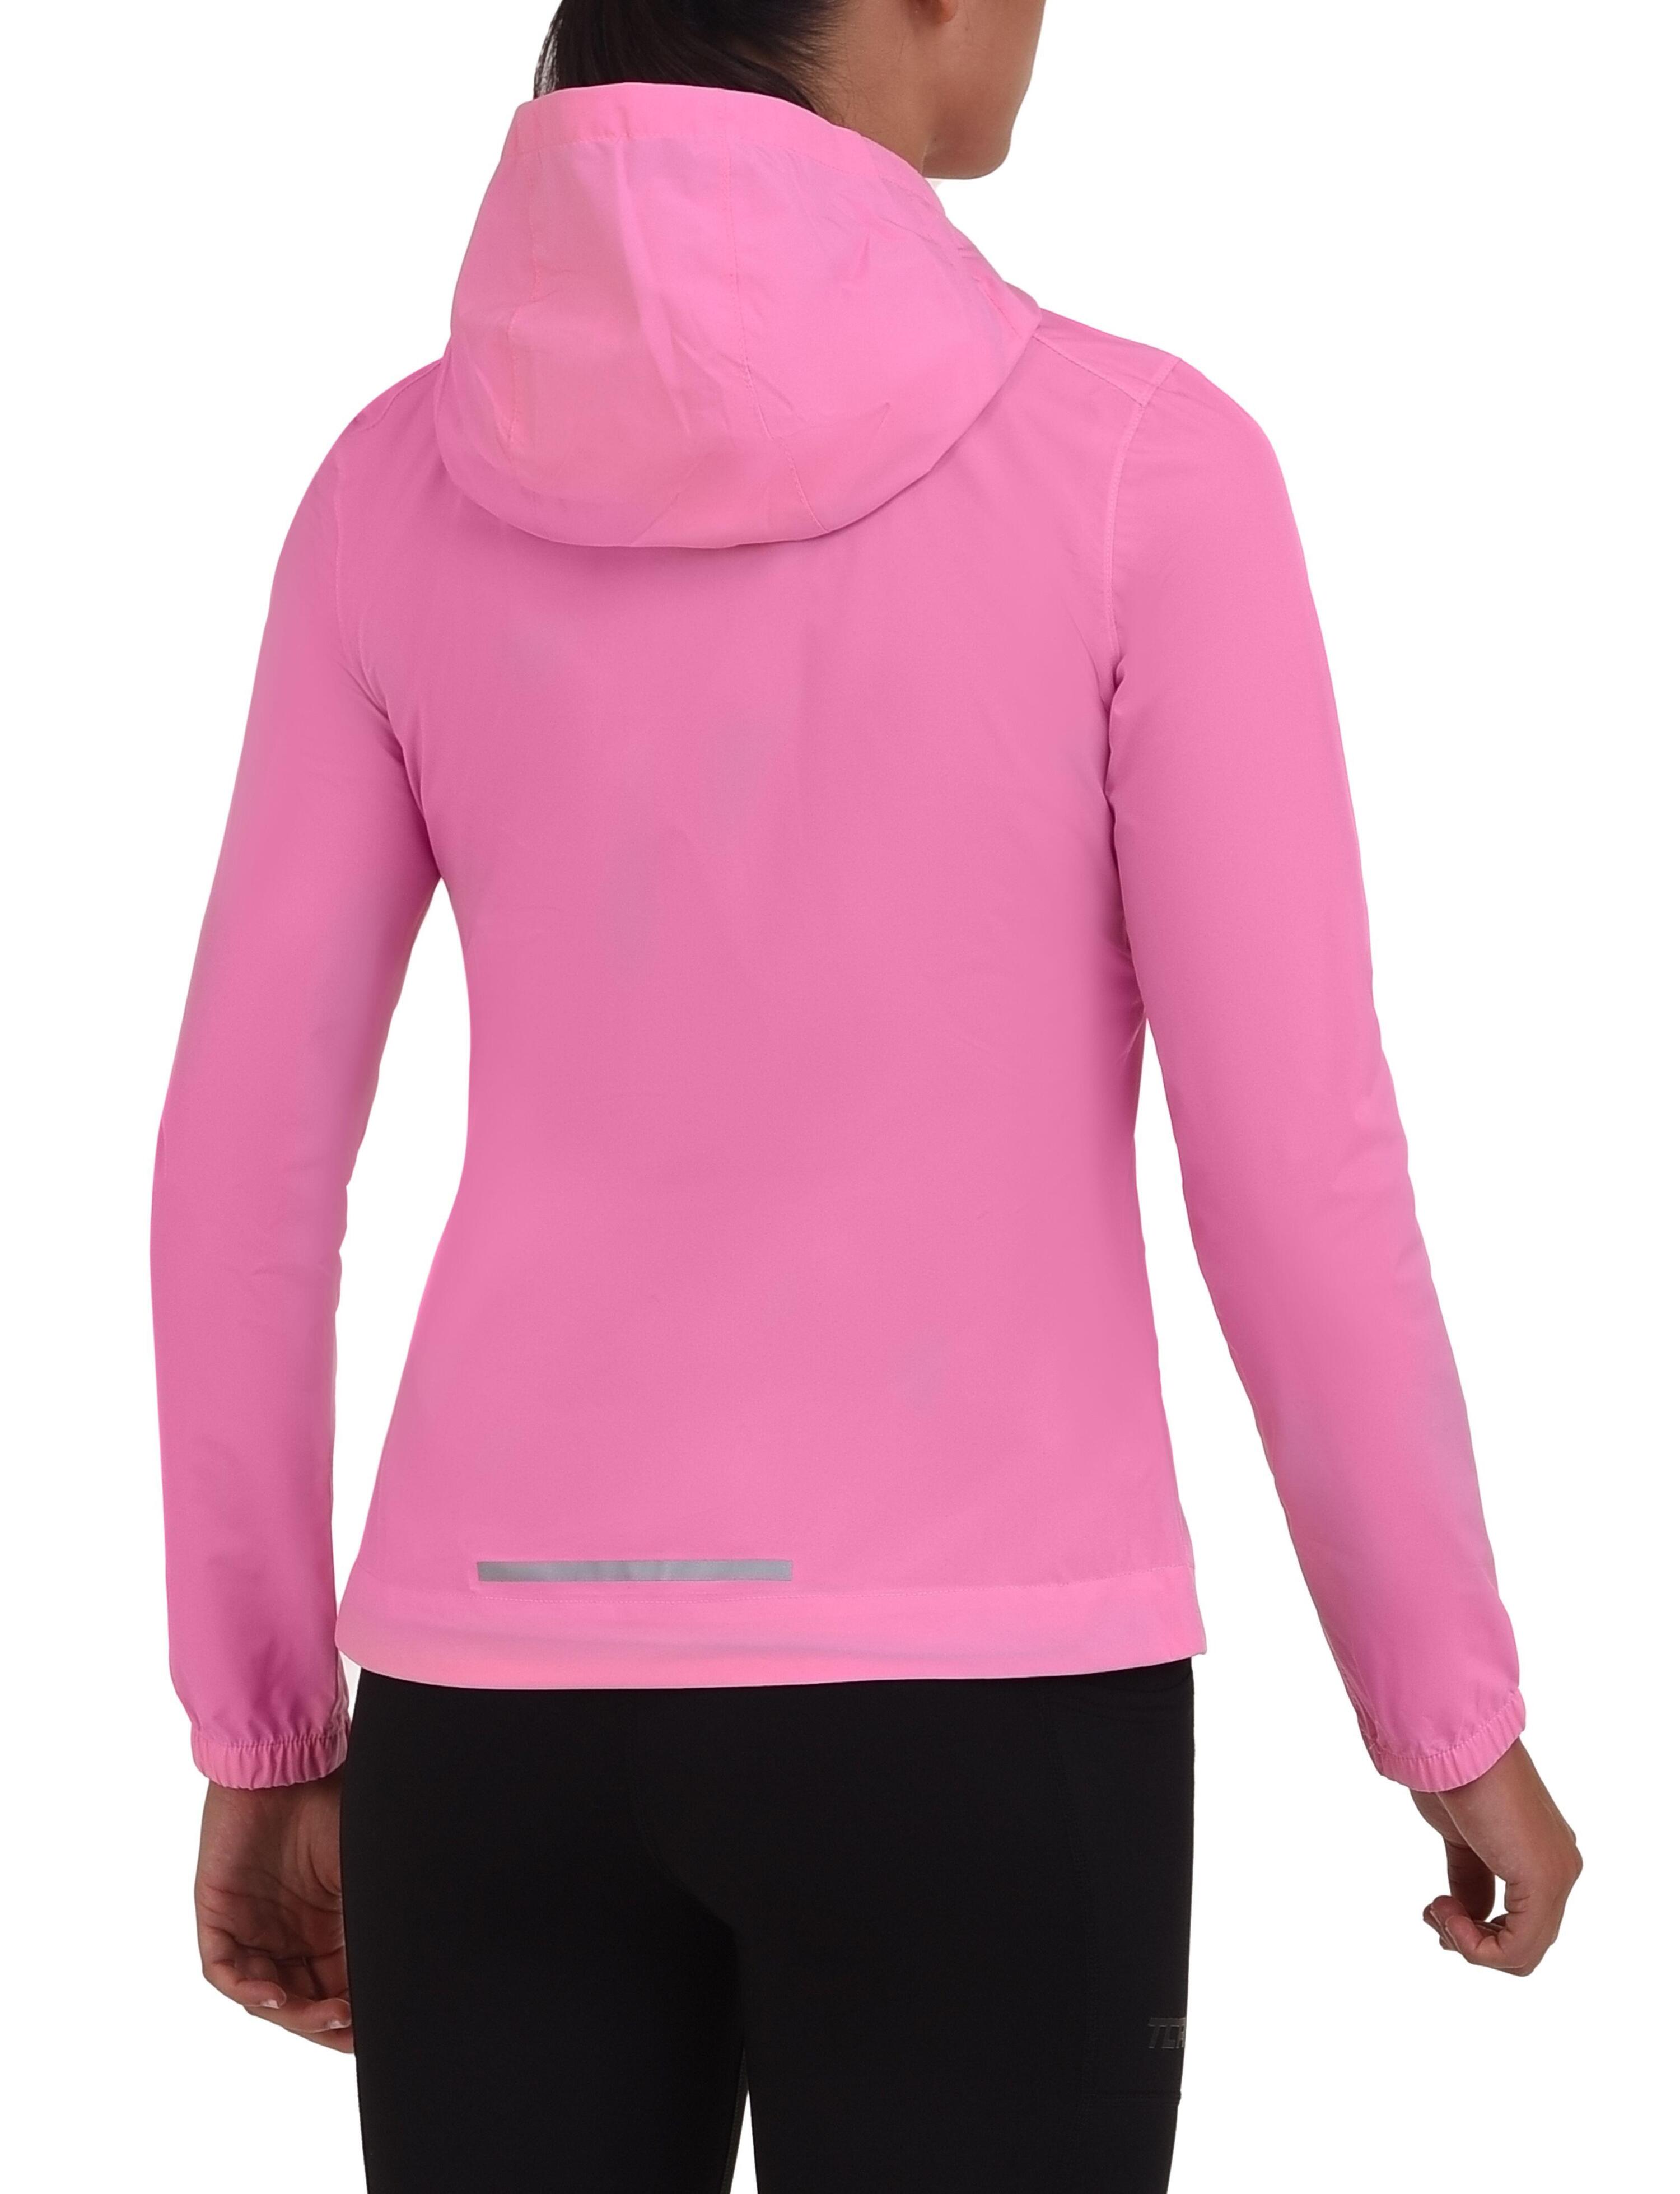 Women's AirLite Rain Jacket with Zip Pockets - Sachet Pink 3/5